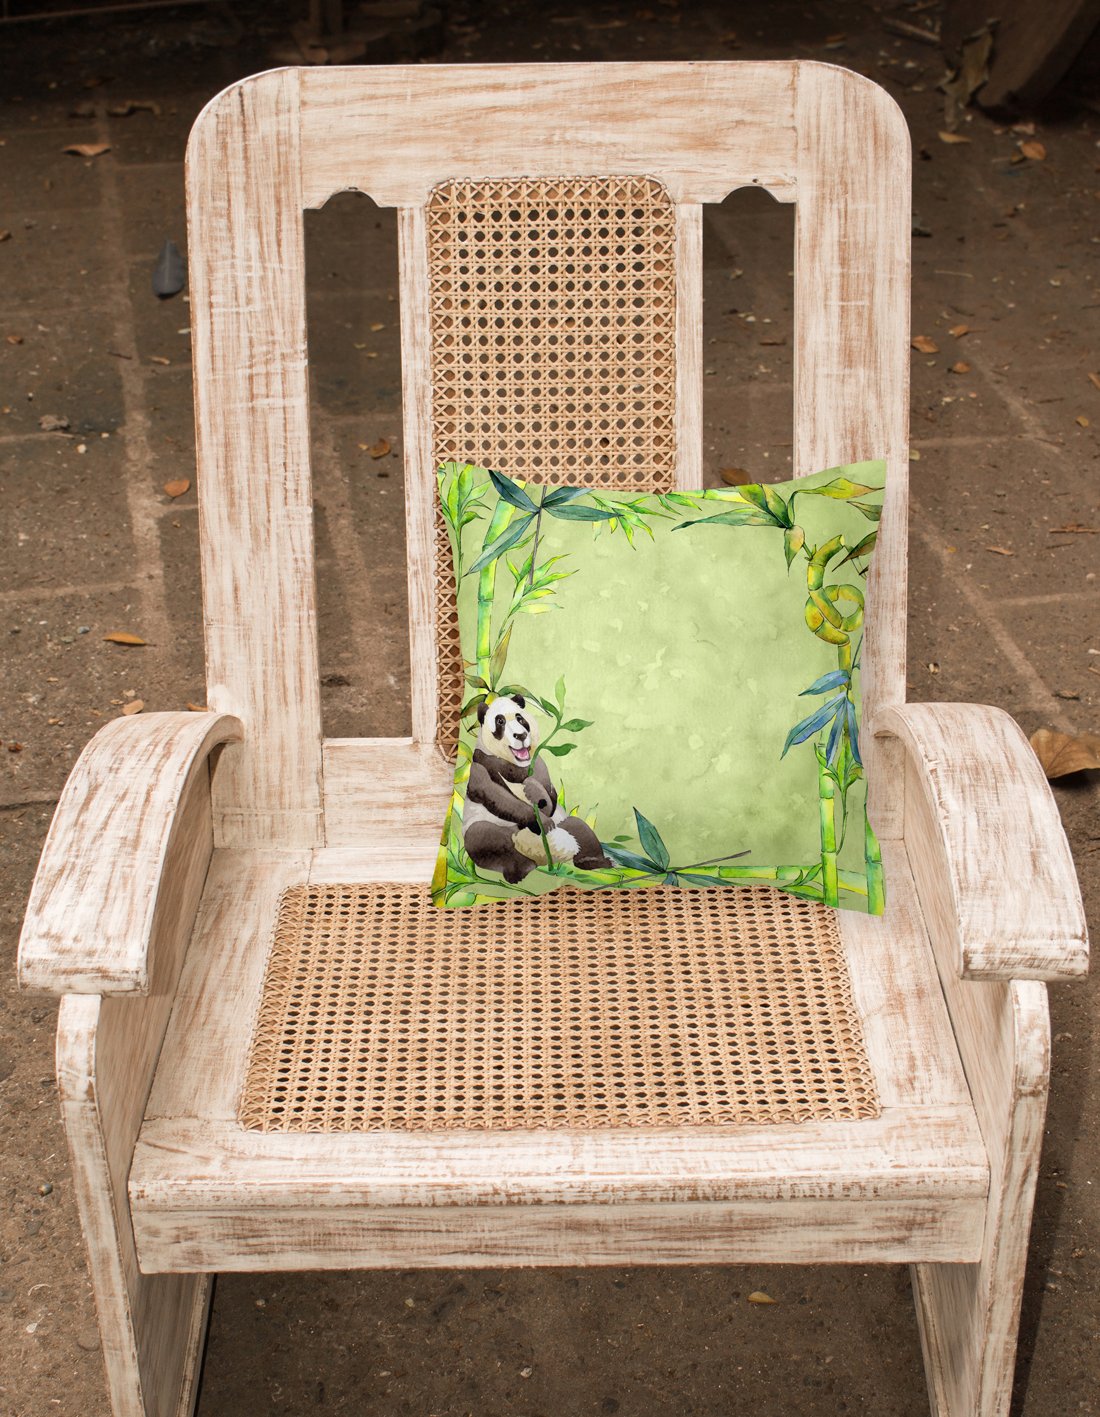 Panda Bear and Bamboo Fabric Decorative Pillow CK1696PW1818 by Caroline's Treasures